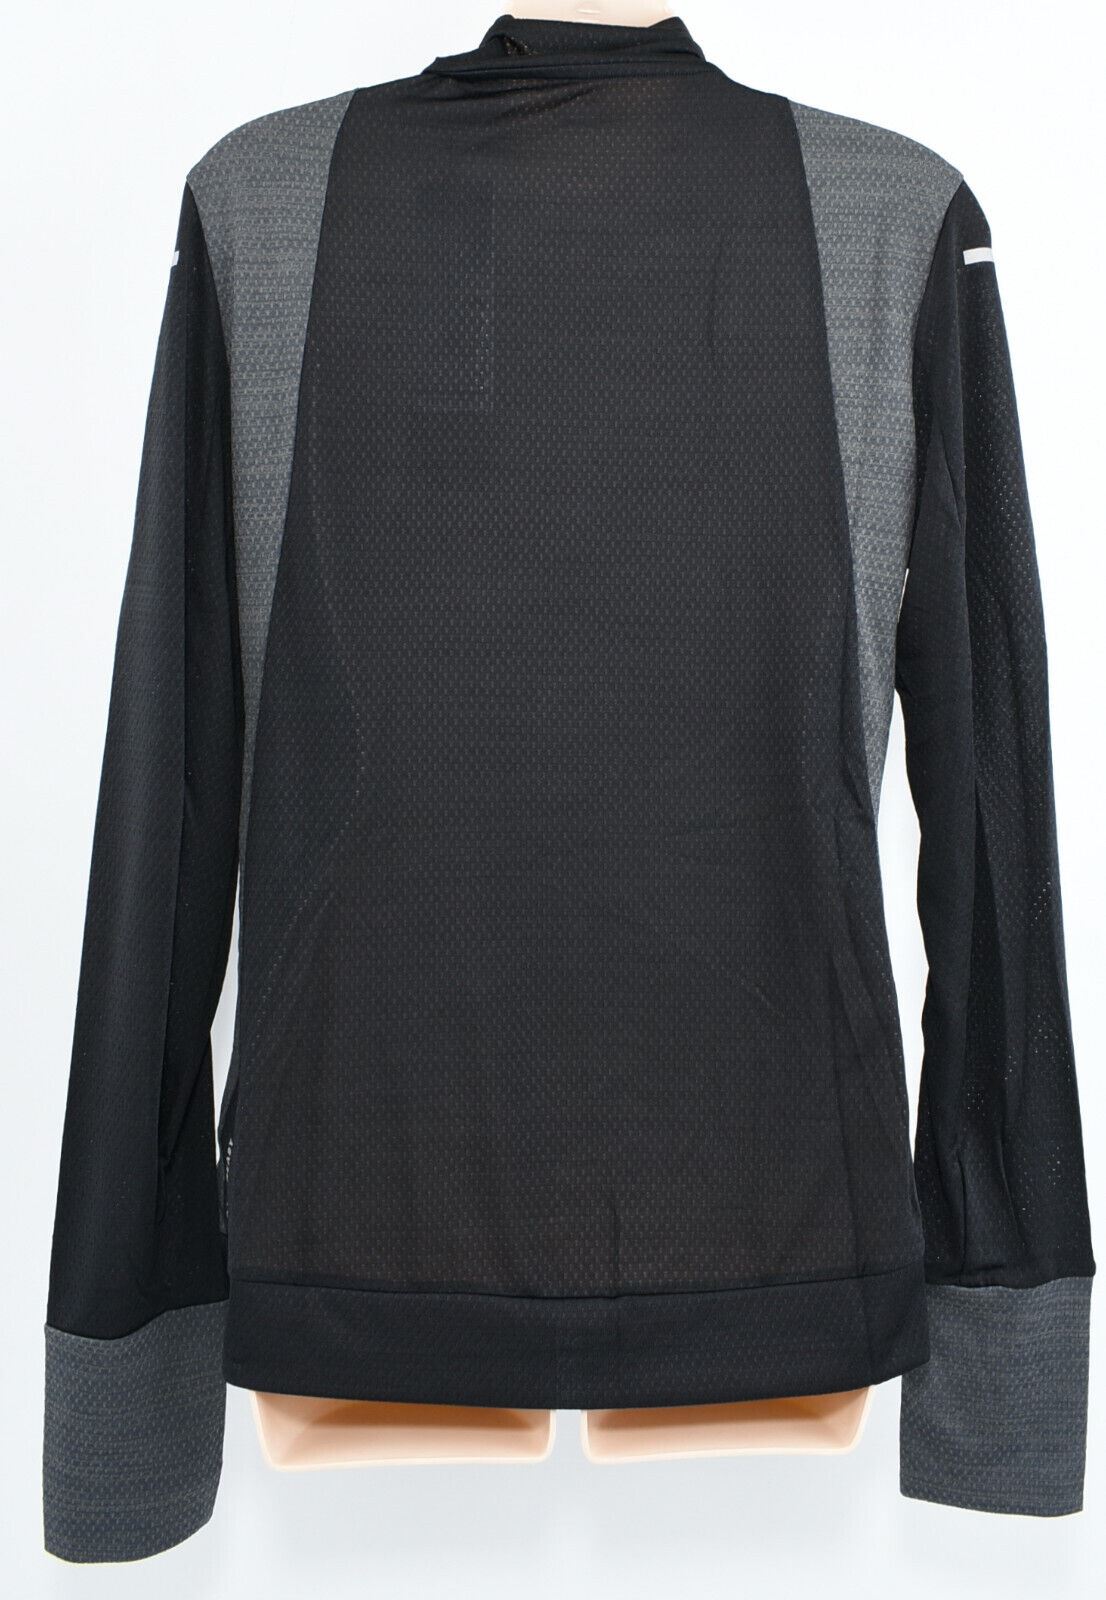 ADIDAS Women's High Neck Long Sleeve Running Top, Black/Grey, size S